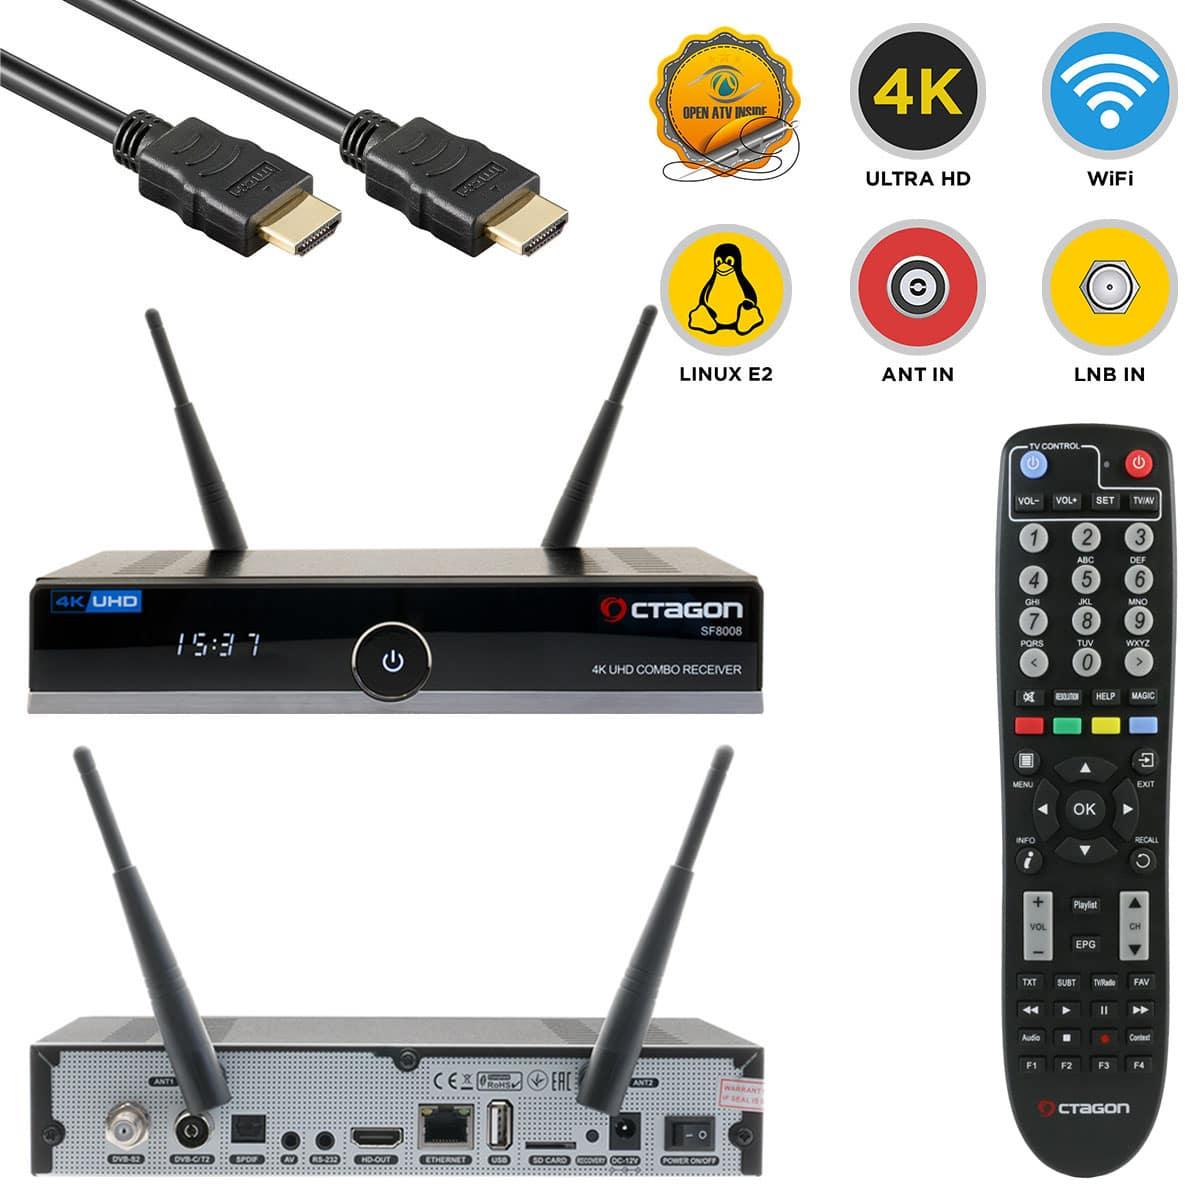 Receptor de satélite Incluye Cable HDMI Babotech® HDR H.265 E2 Linux Dual WiFi Octagon SF8008 UHD 4K 